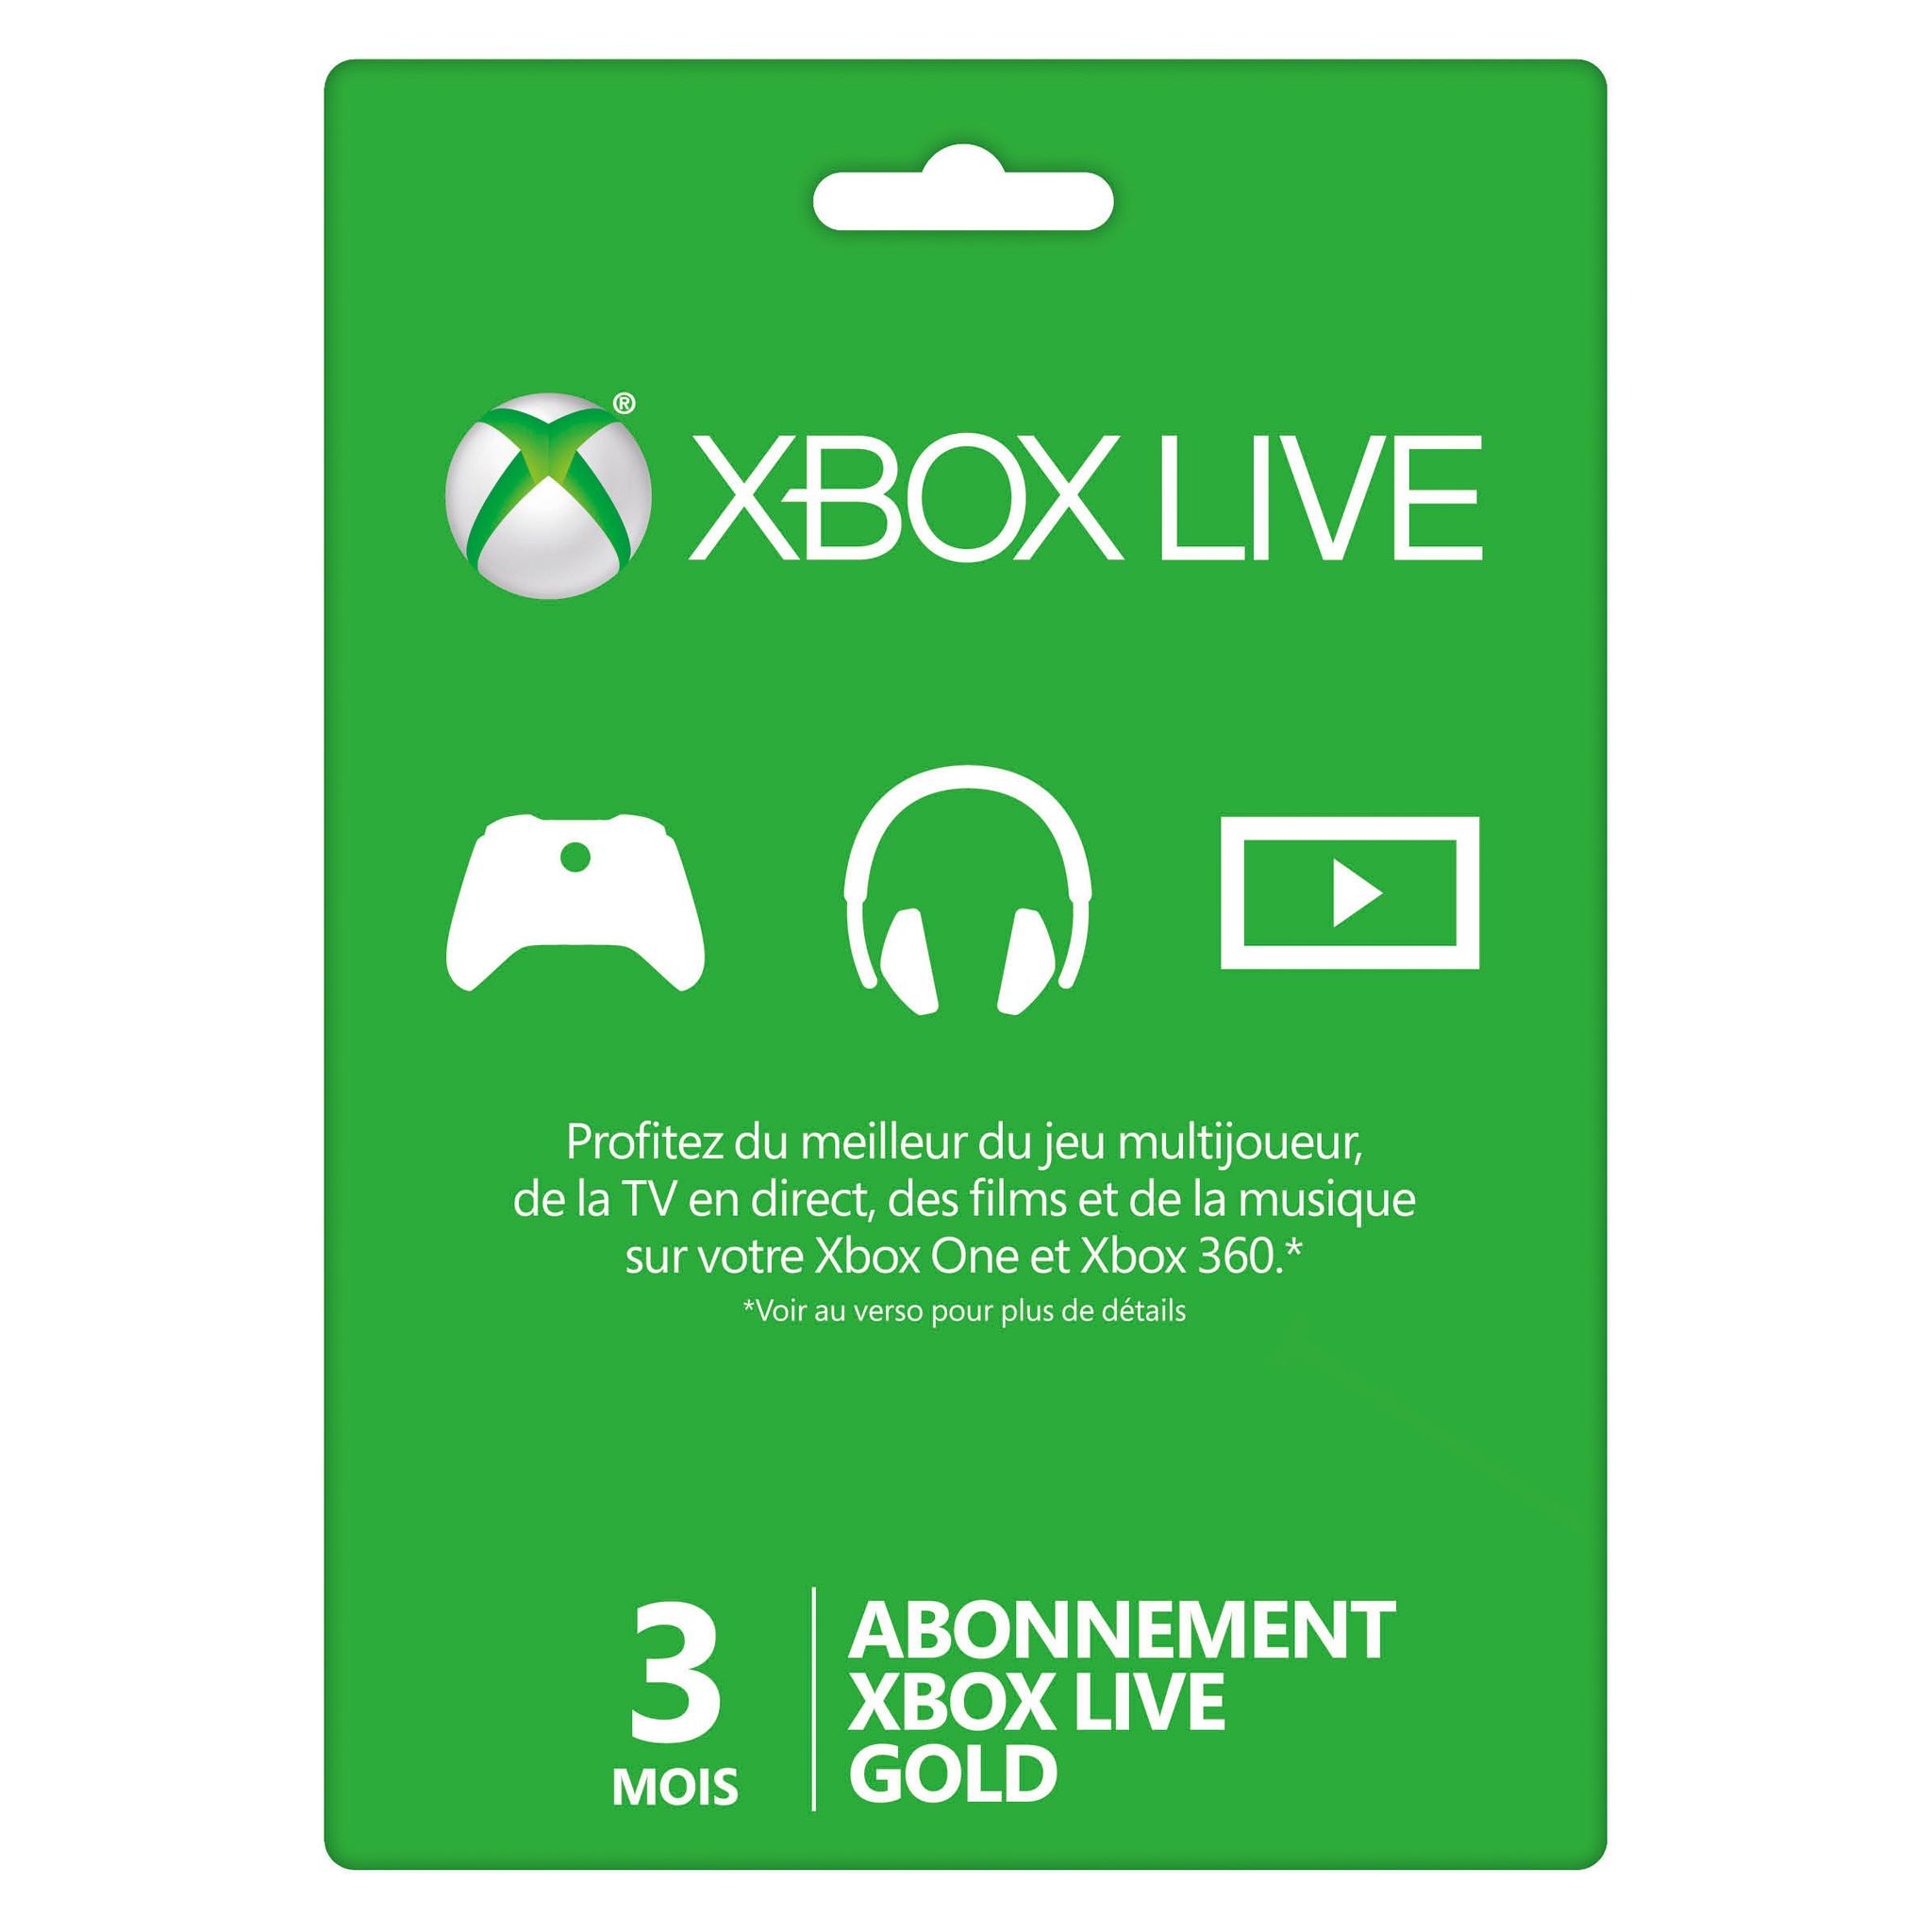 rommel Zich verzetten tegen belofte MICROSOFT Abonnement Xbox Live Gold 3 Mois pas cher - Auchan.fr